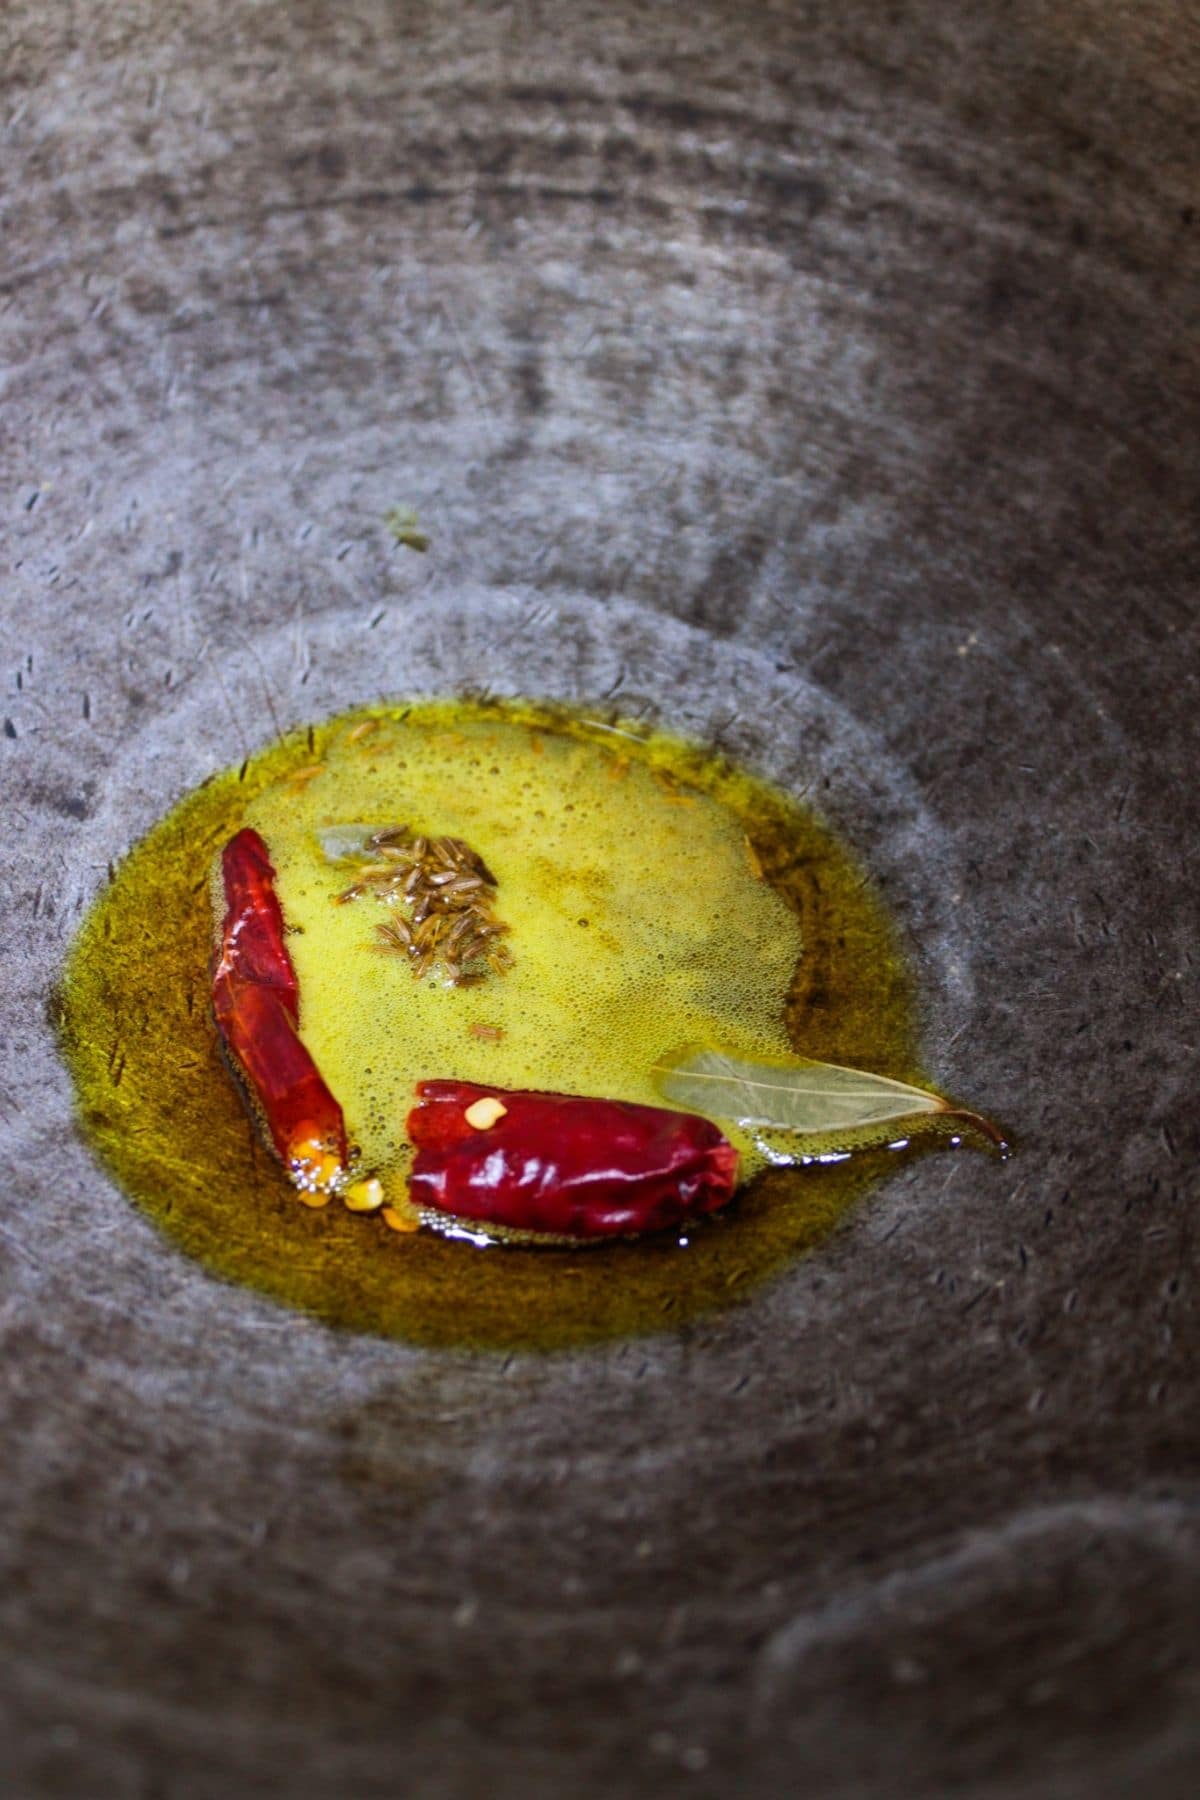 Red chile in oil in skillet